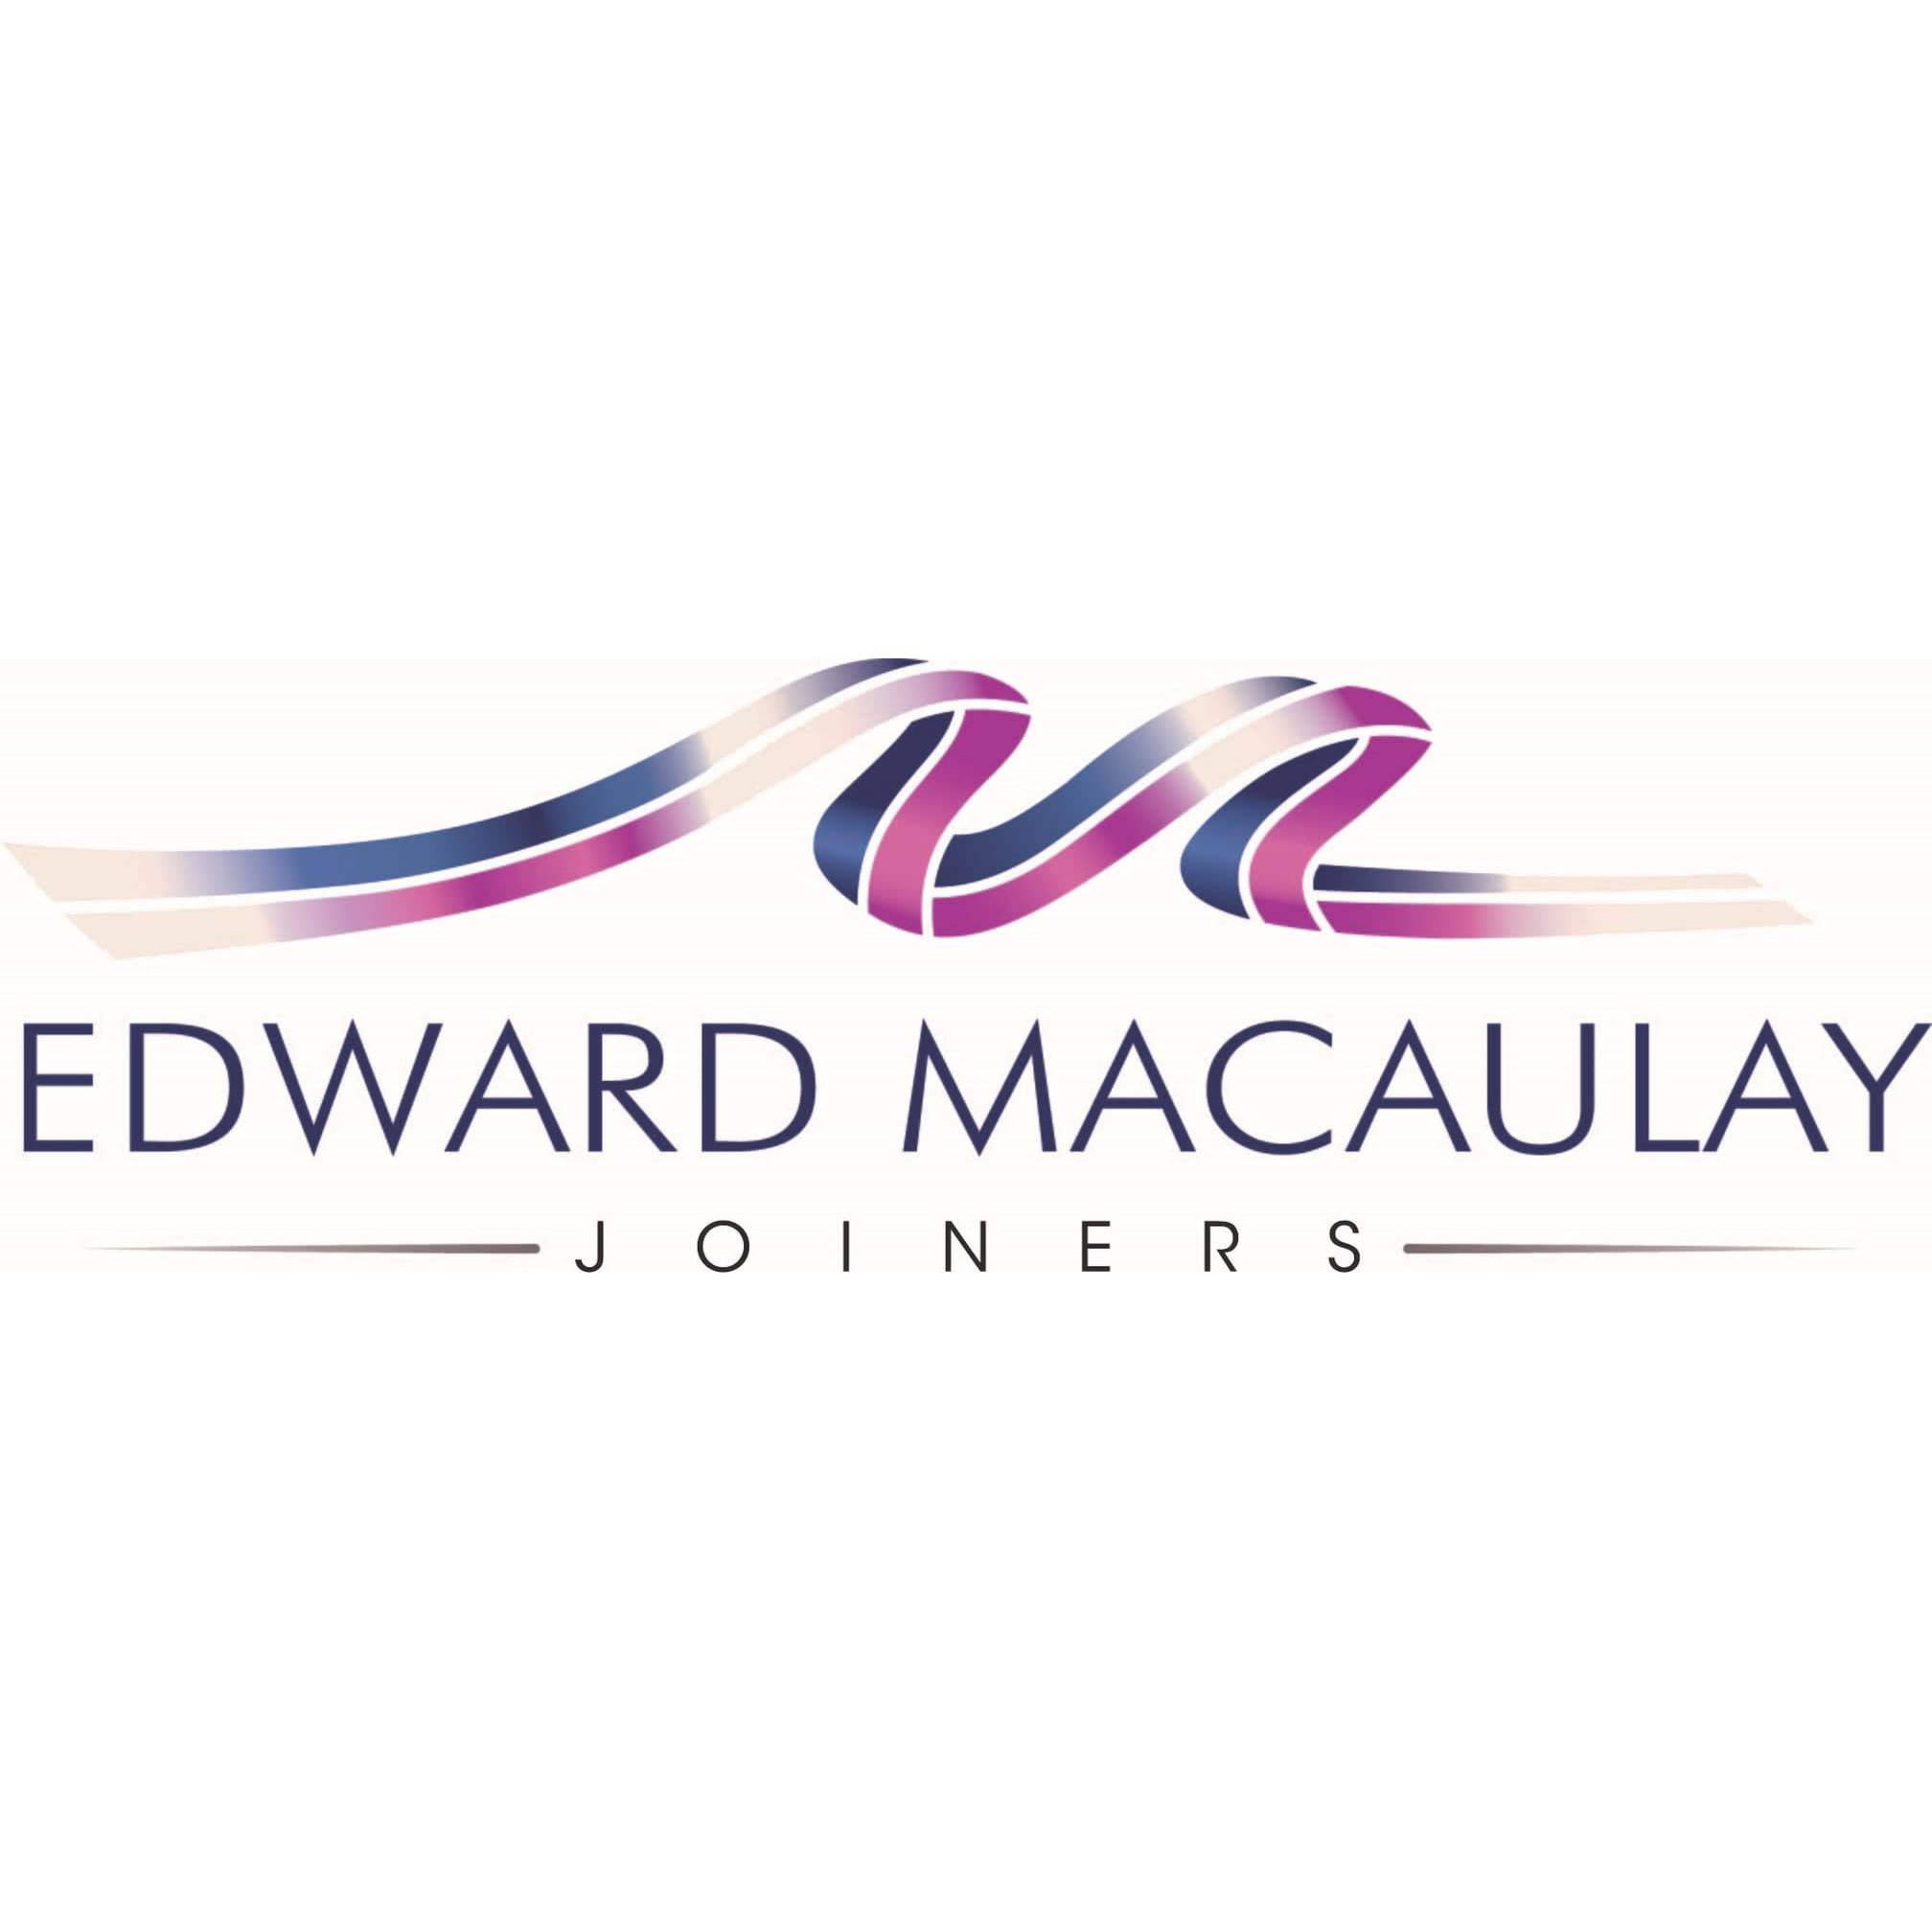 Edward Macaulay Joiners Logo